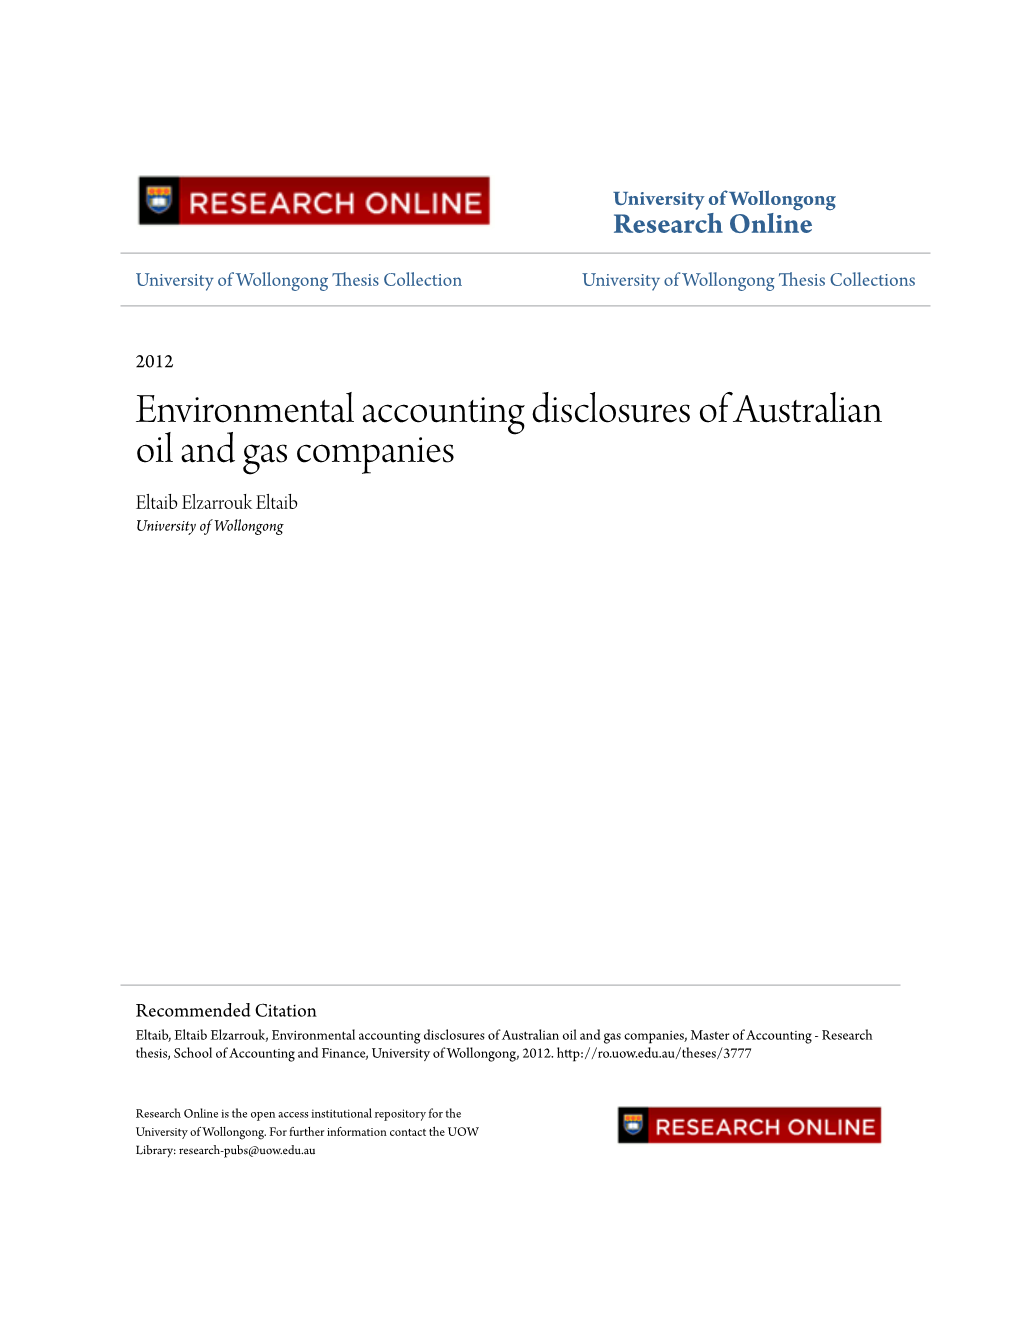 Environmental Accounting Disclosures of Australian Oil and Gas Companies Eltaib Elzarrouk Eltaib University of Wollongong